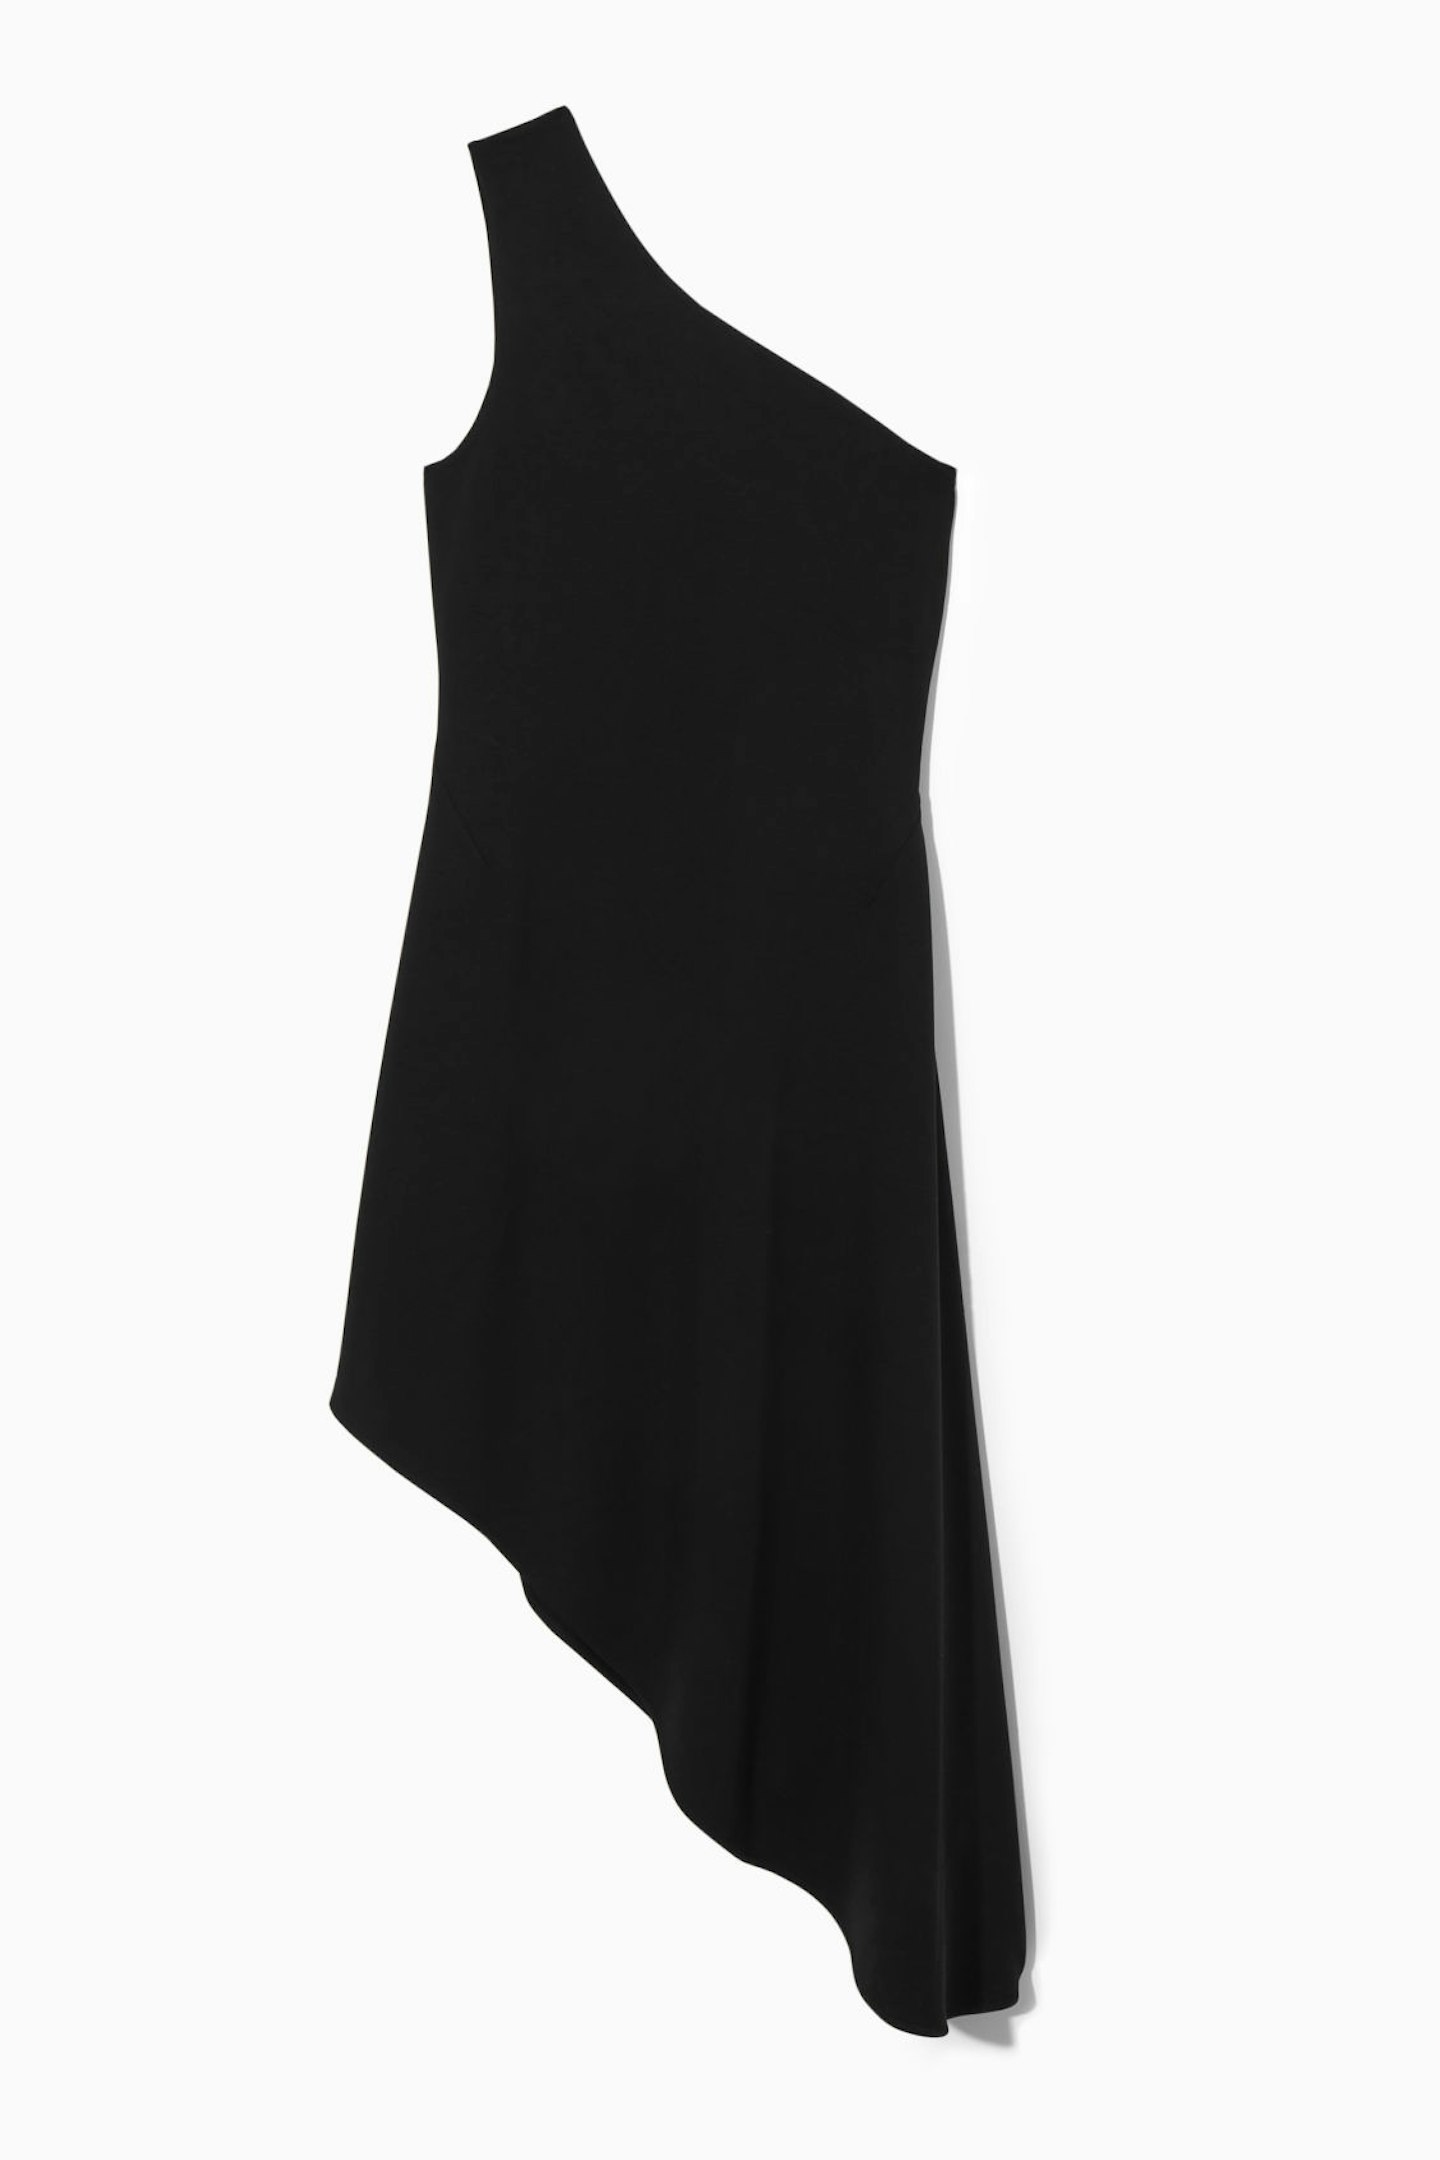 COS, Asymmetric One-Shoulder Midi Dress